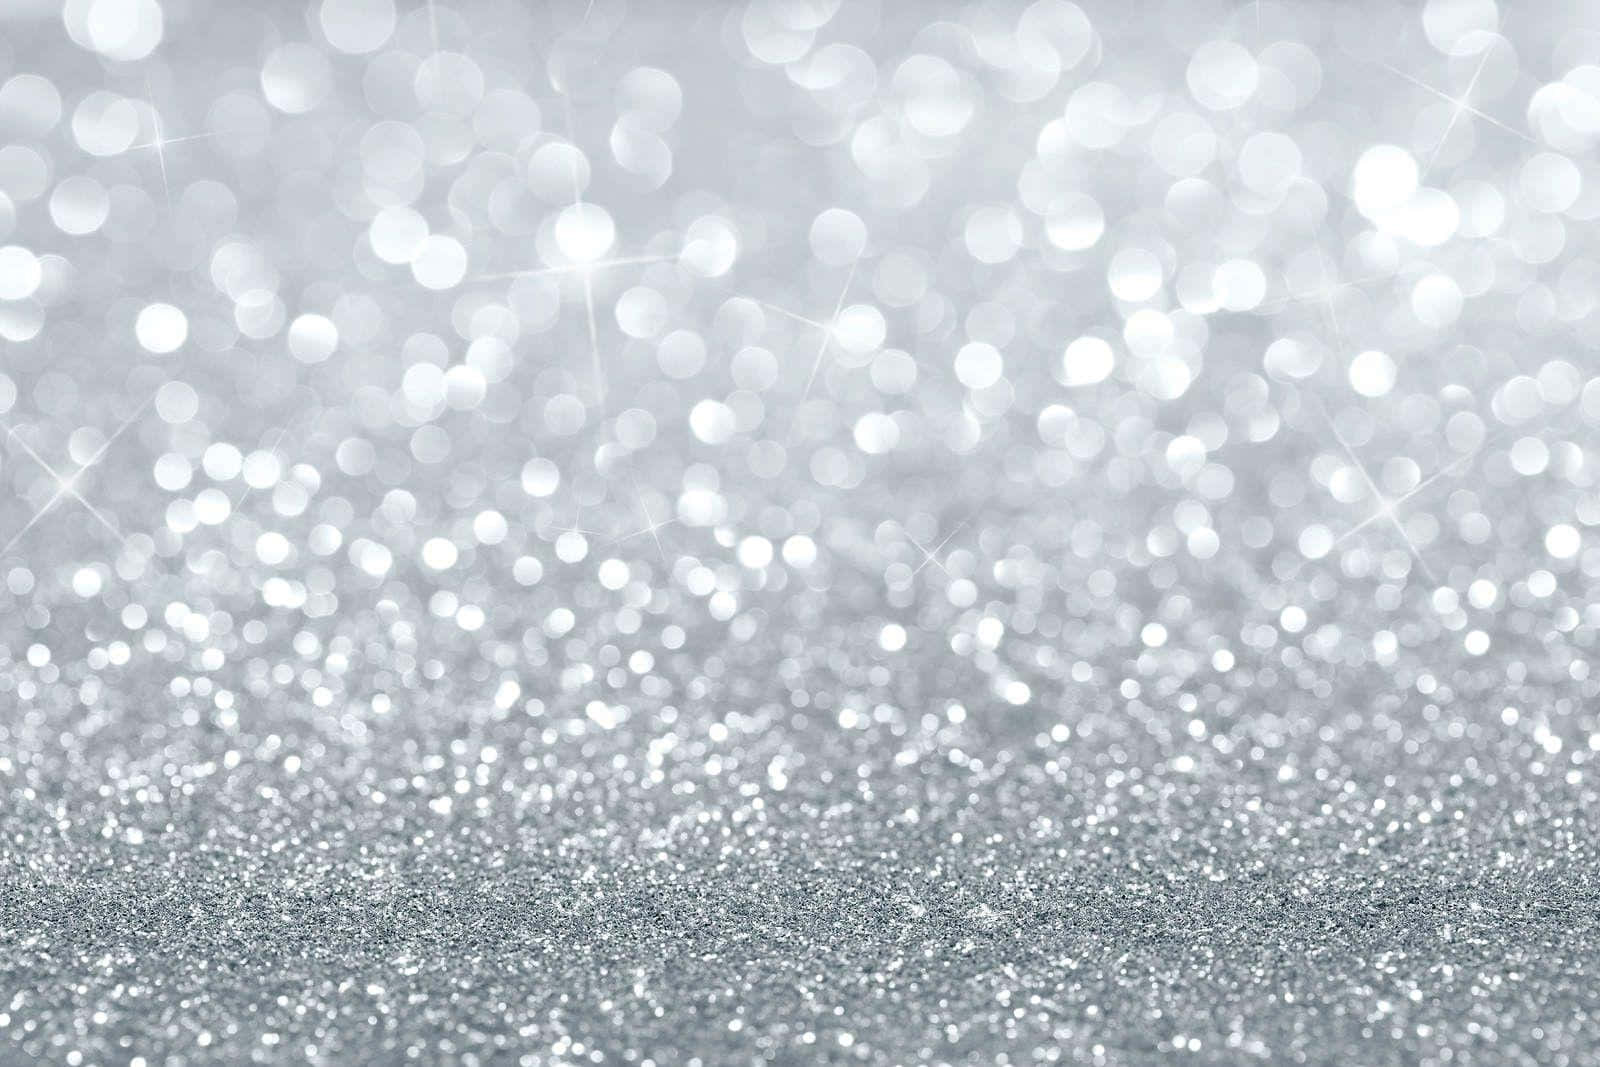 A mesmerizing silver sparkle background